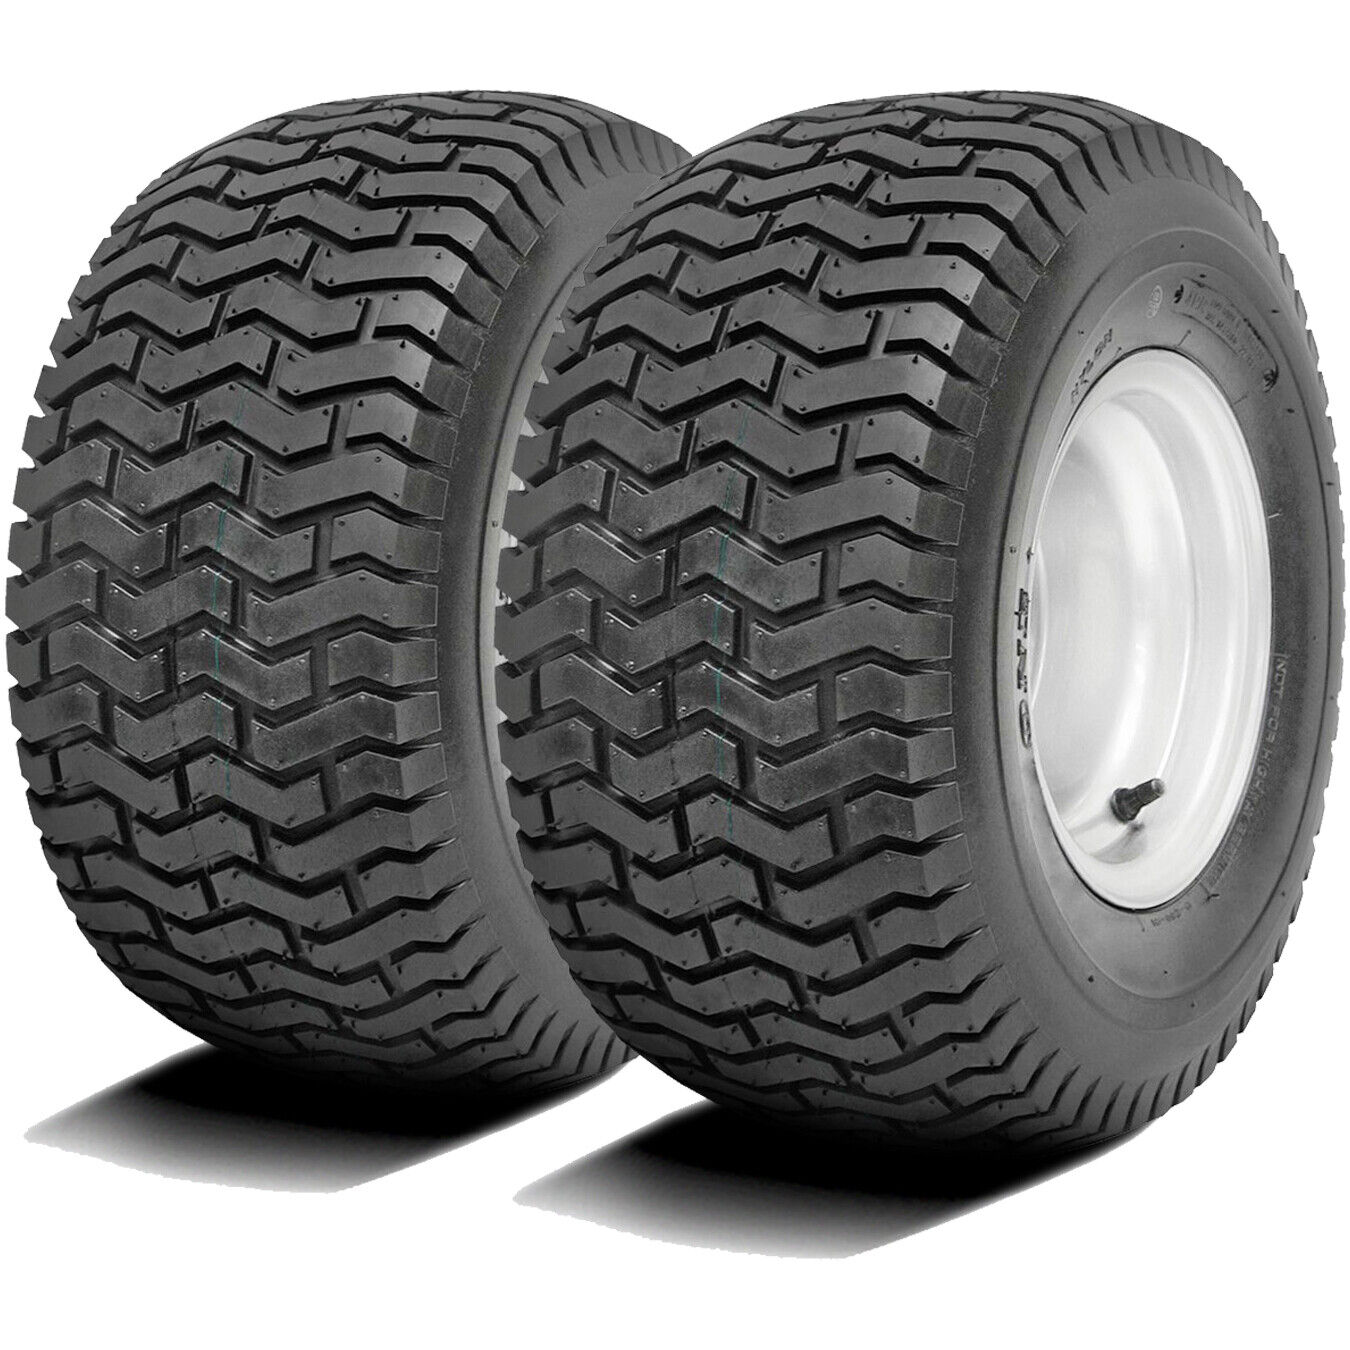 2 Tires Deestone D265 Turf 20X10.00-10 86A3 4 Ply Lawn & Garden